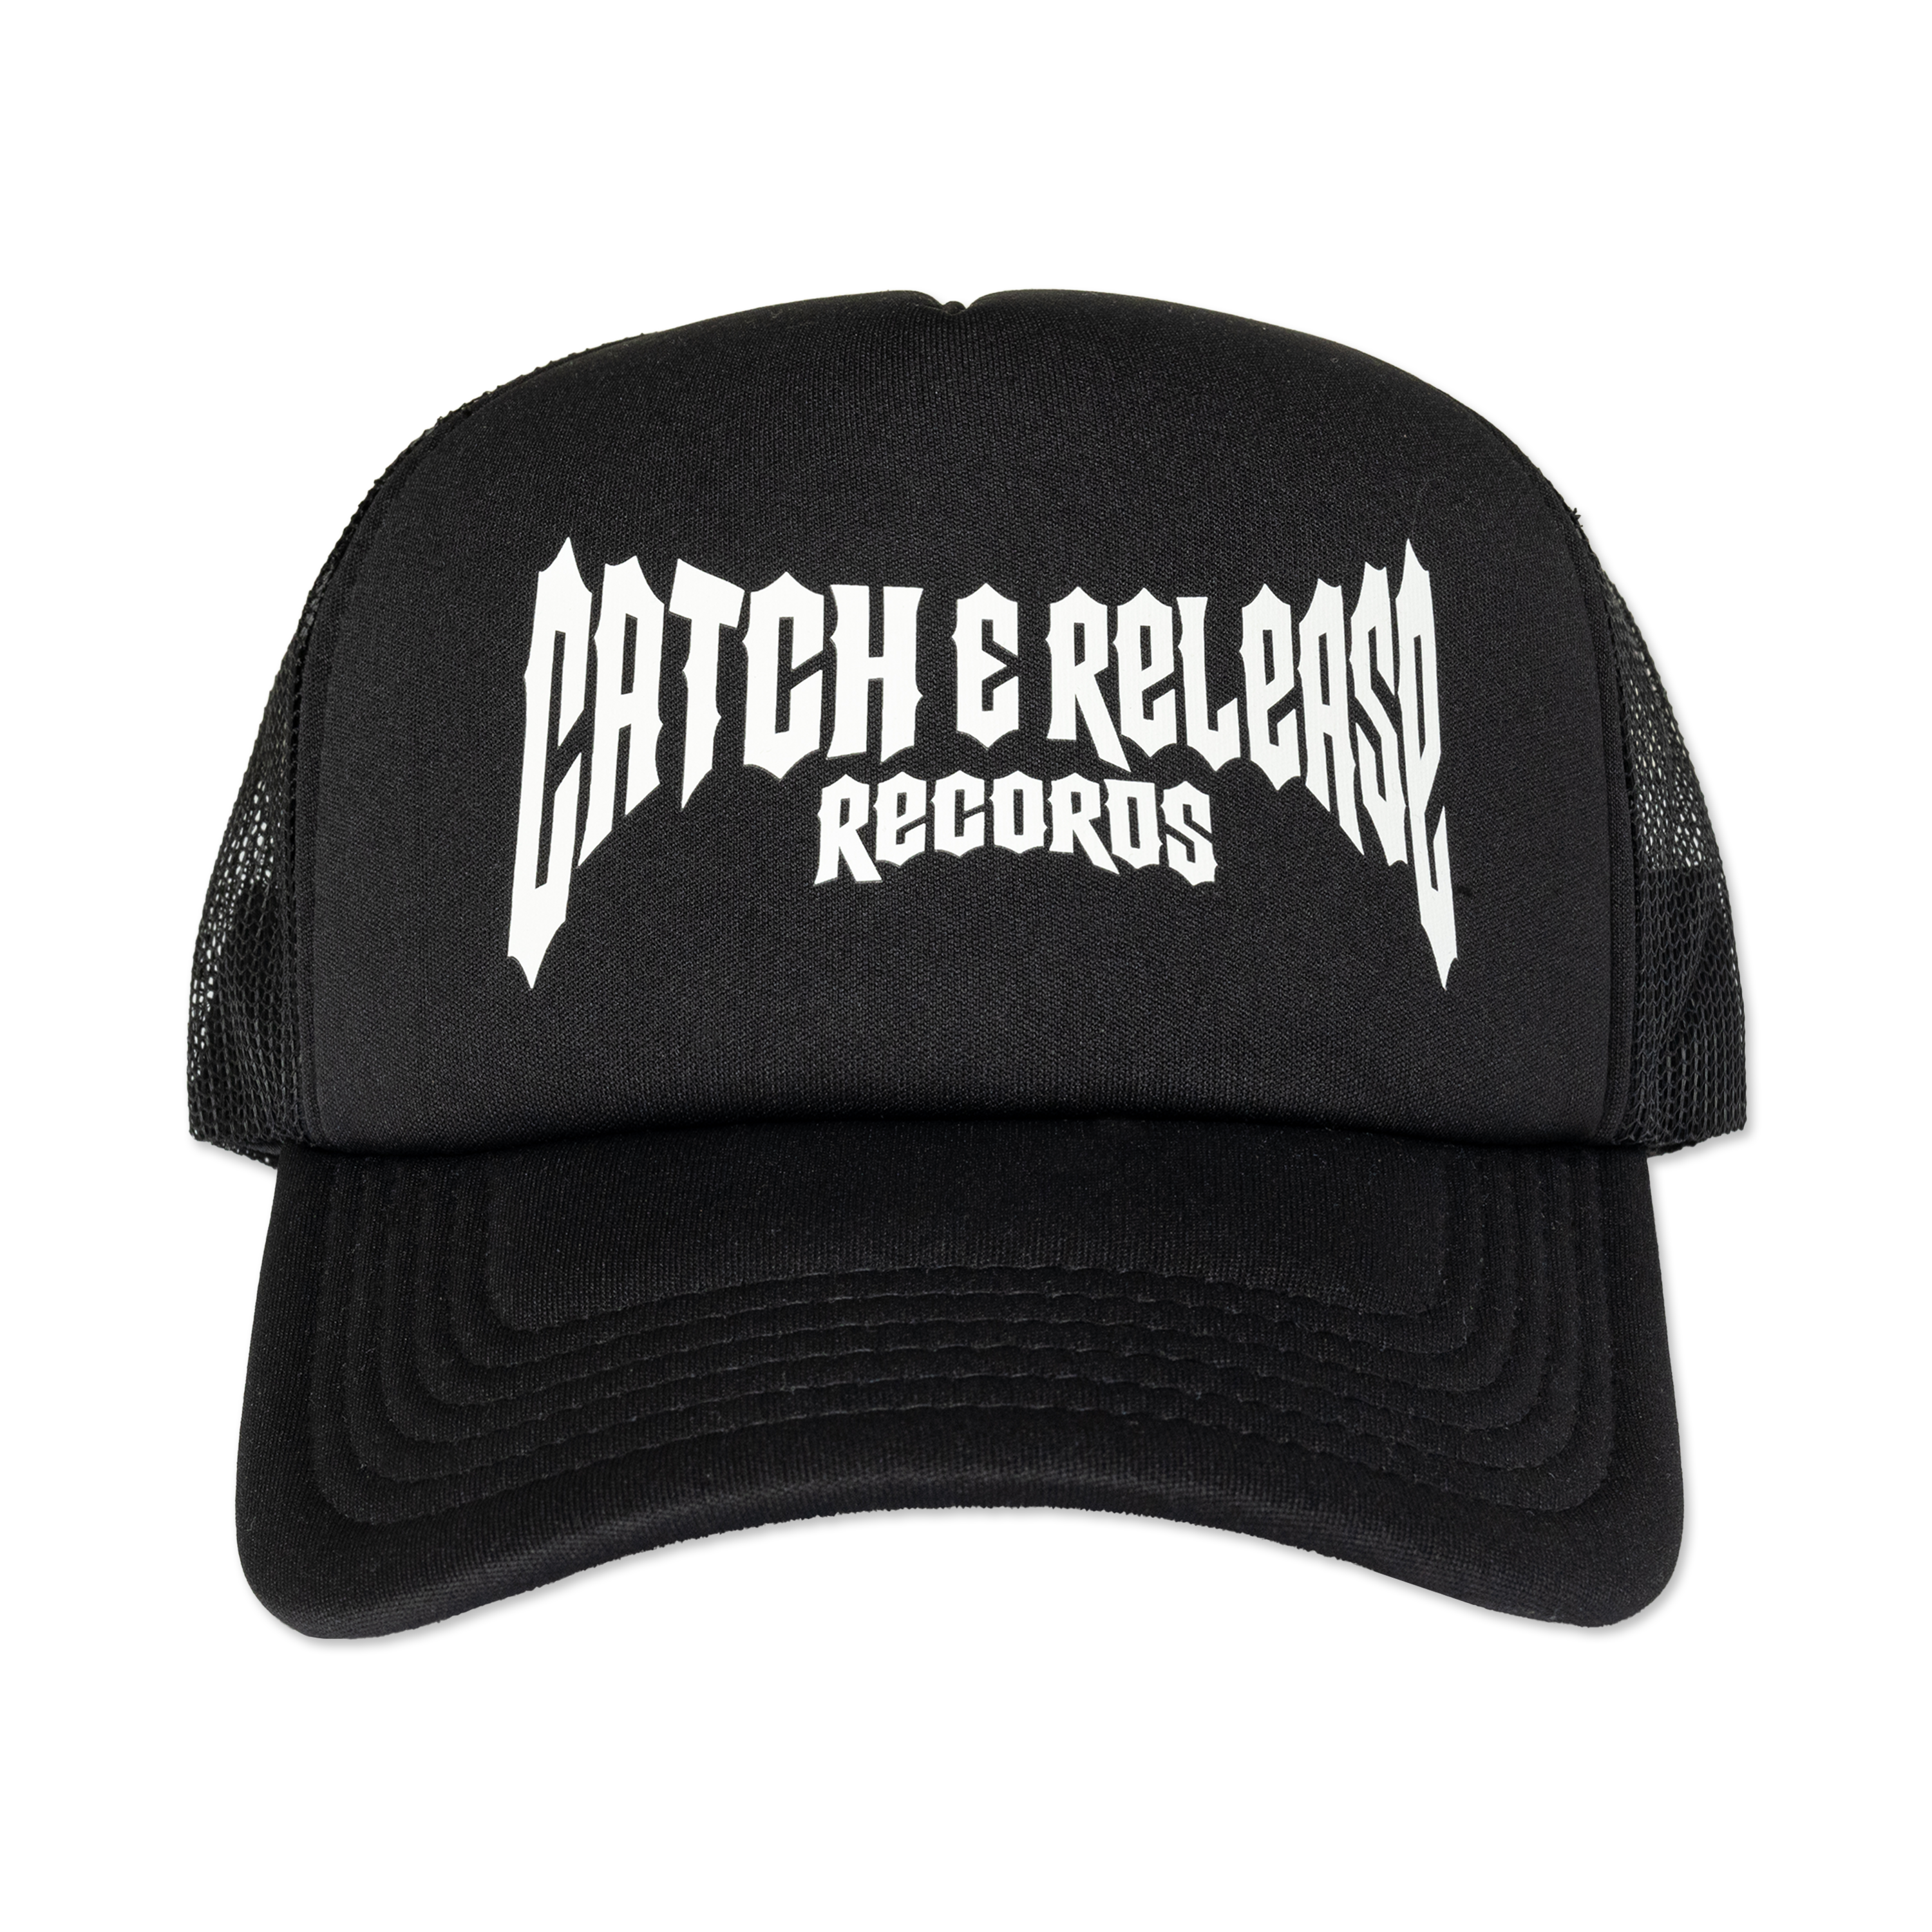 CATCH & RELEASE RECORDS TRUCKER HAT